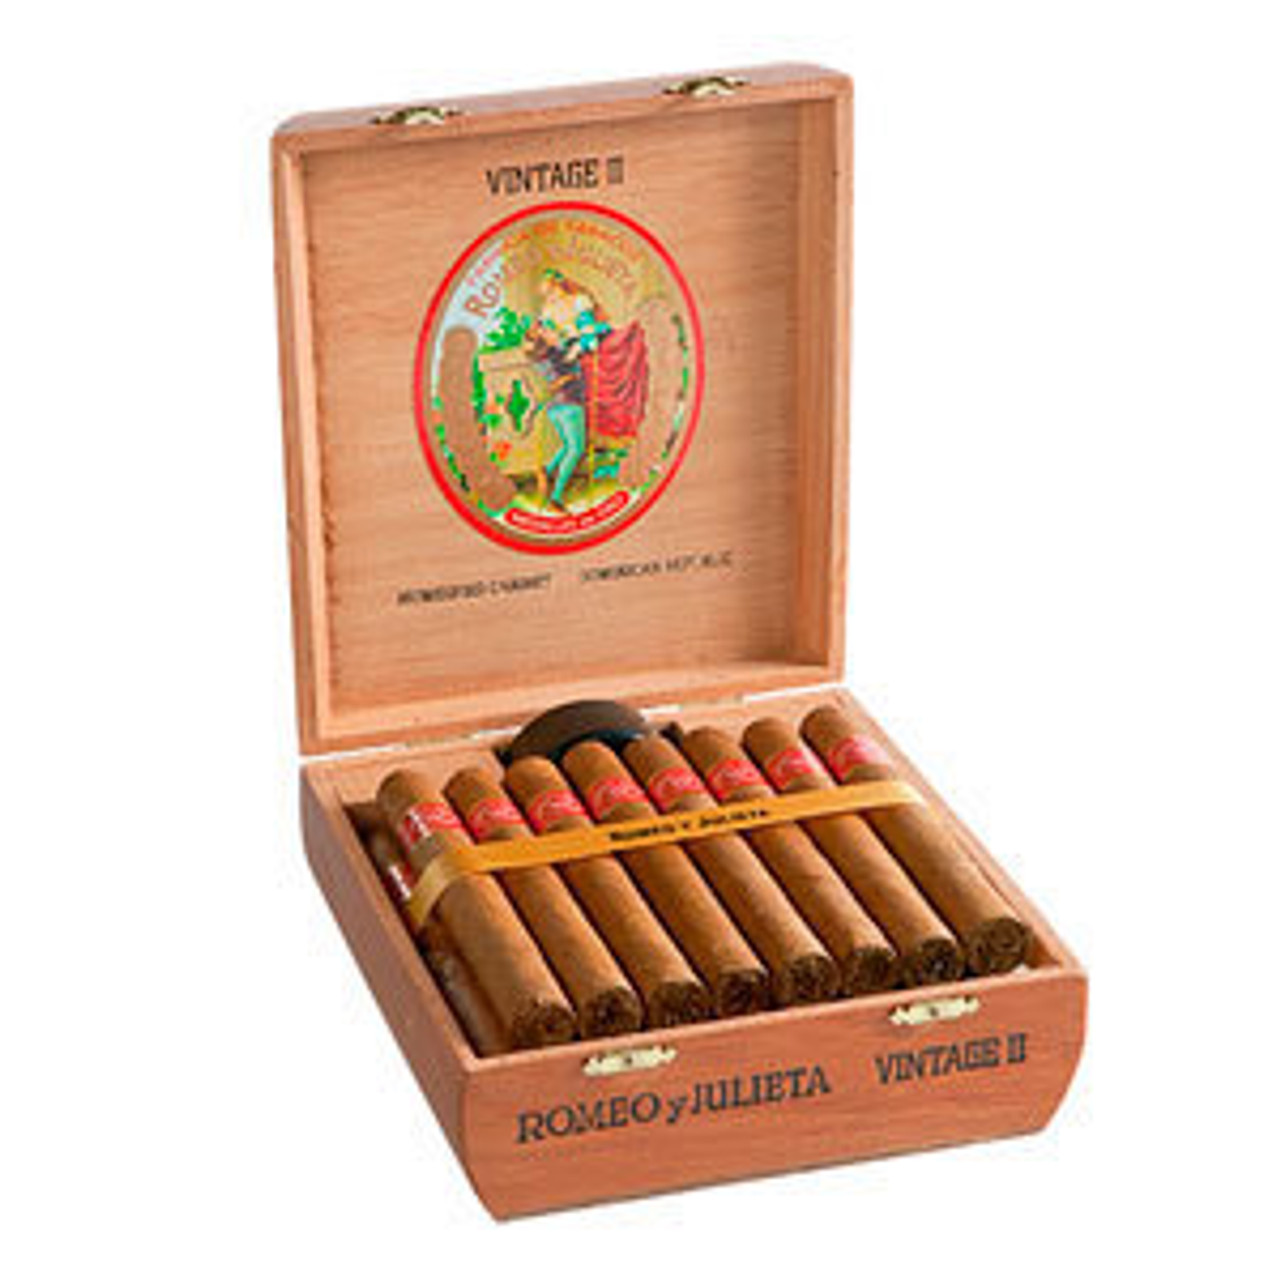 Romeo y Julieta Vintage VI Cigars - 6.5 x 60 (Box of 20) Open